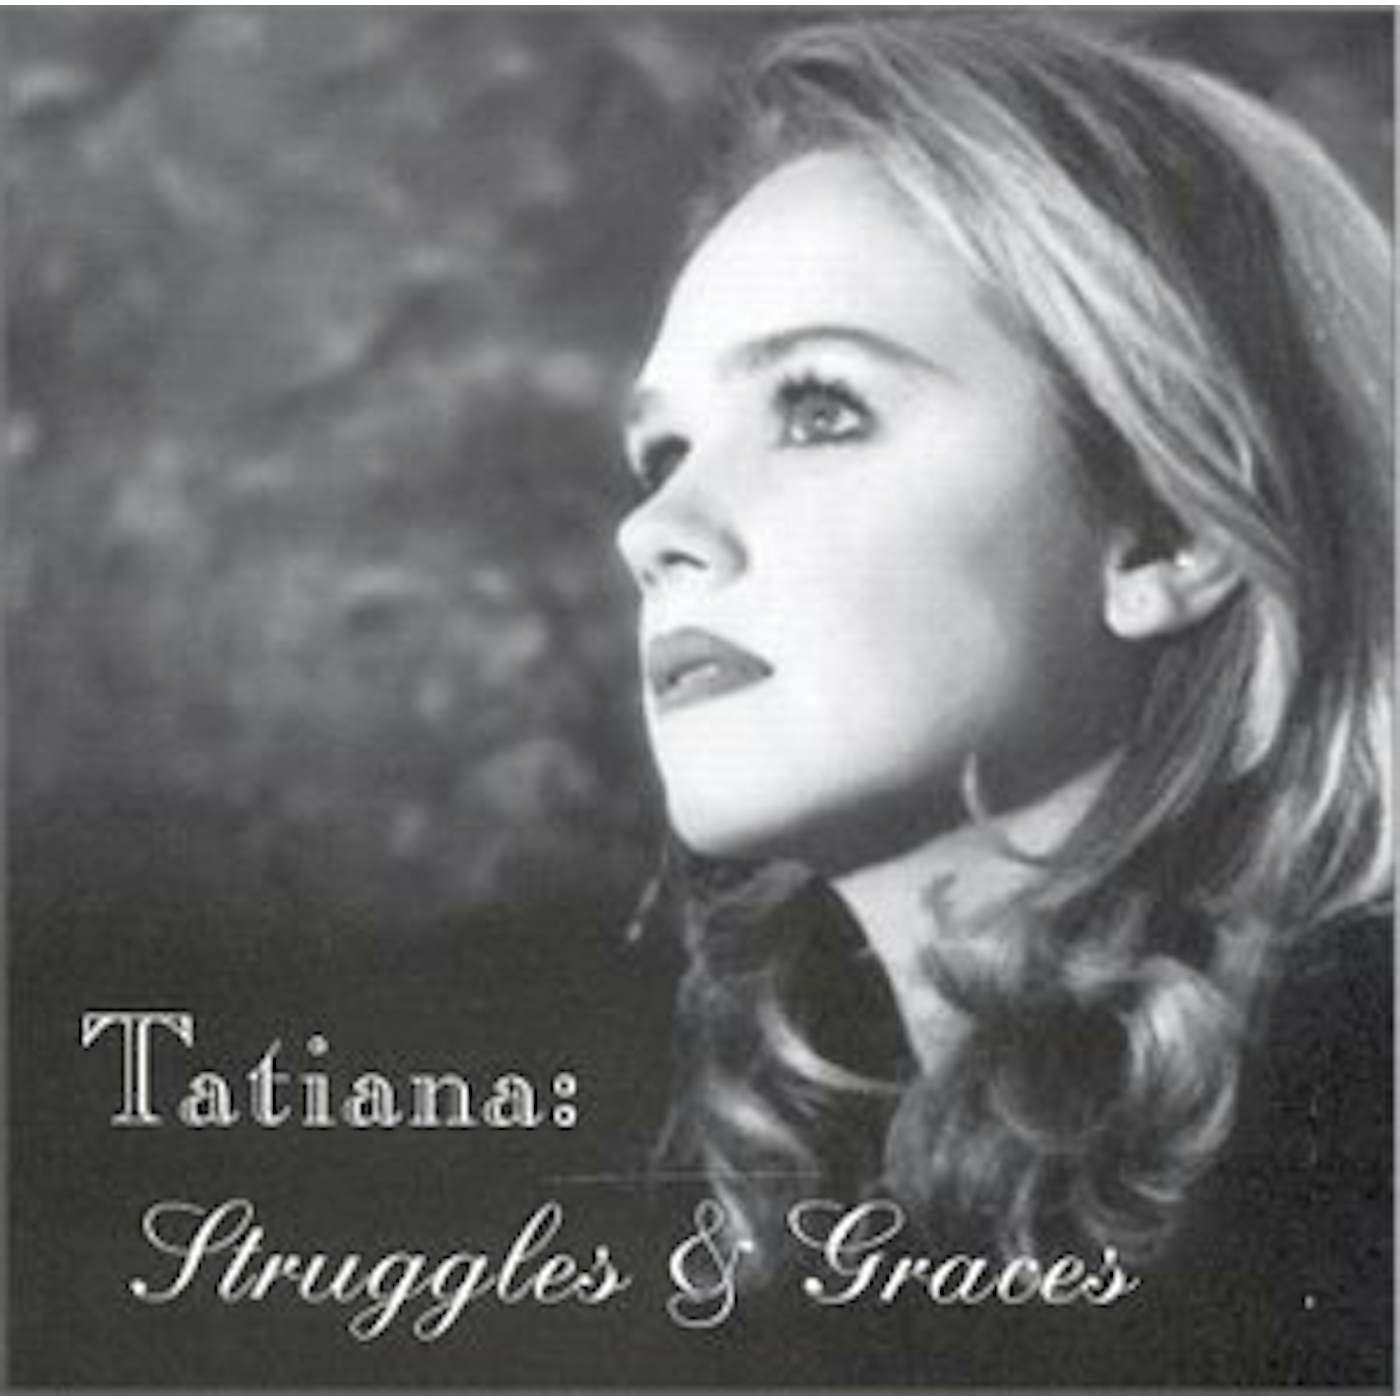 Tatiana STRUGGLES & GRACES CD